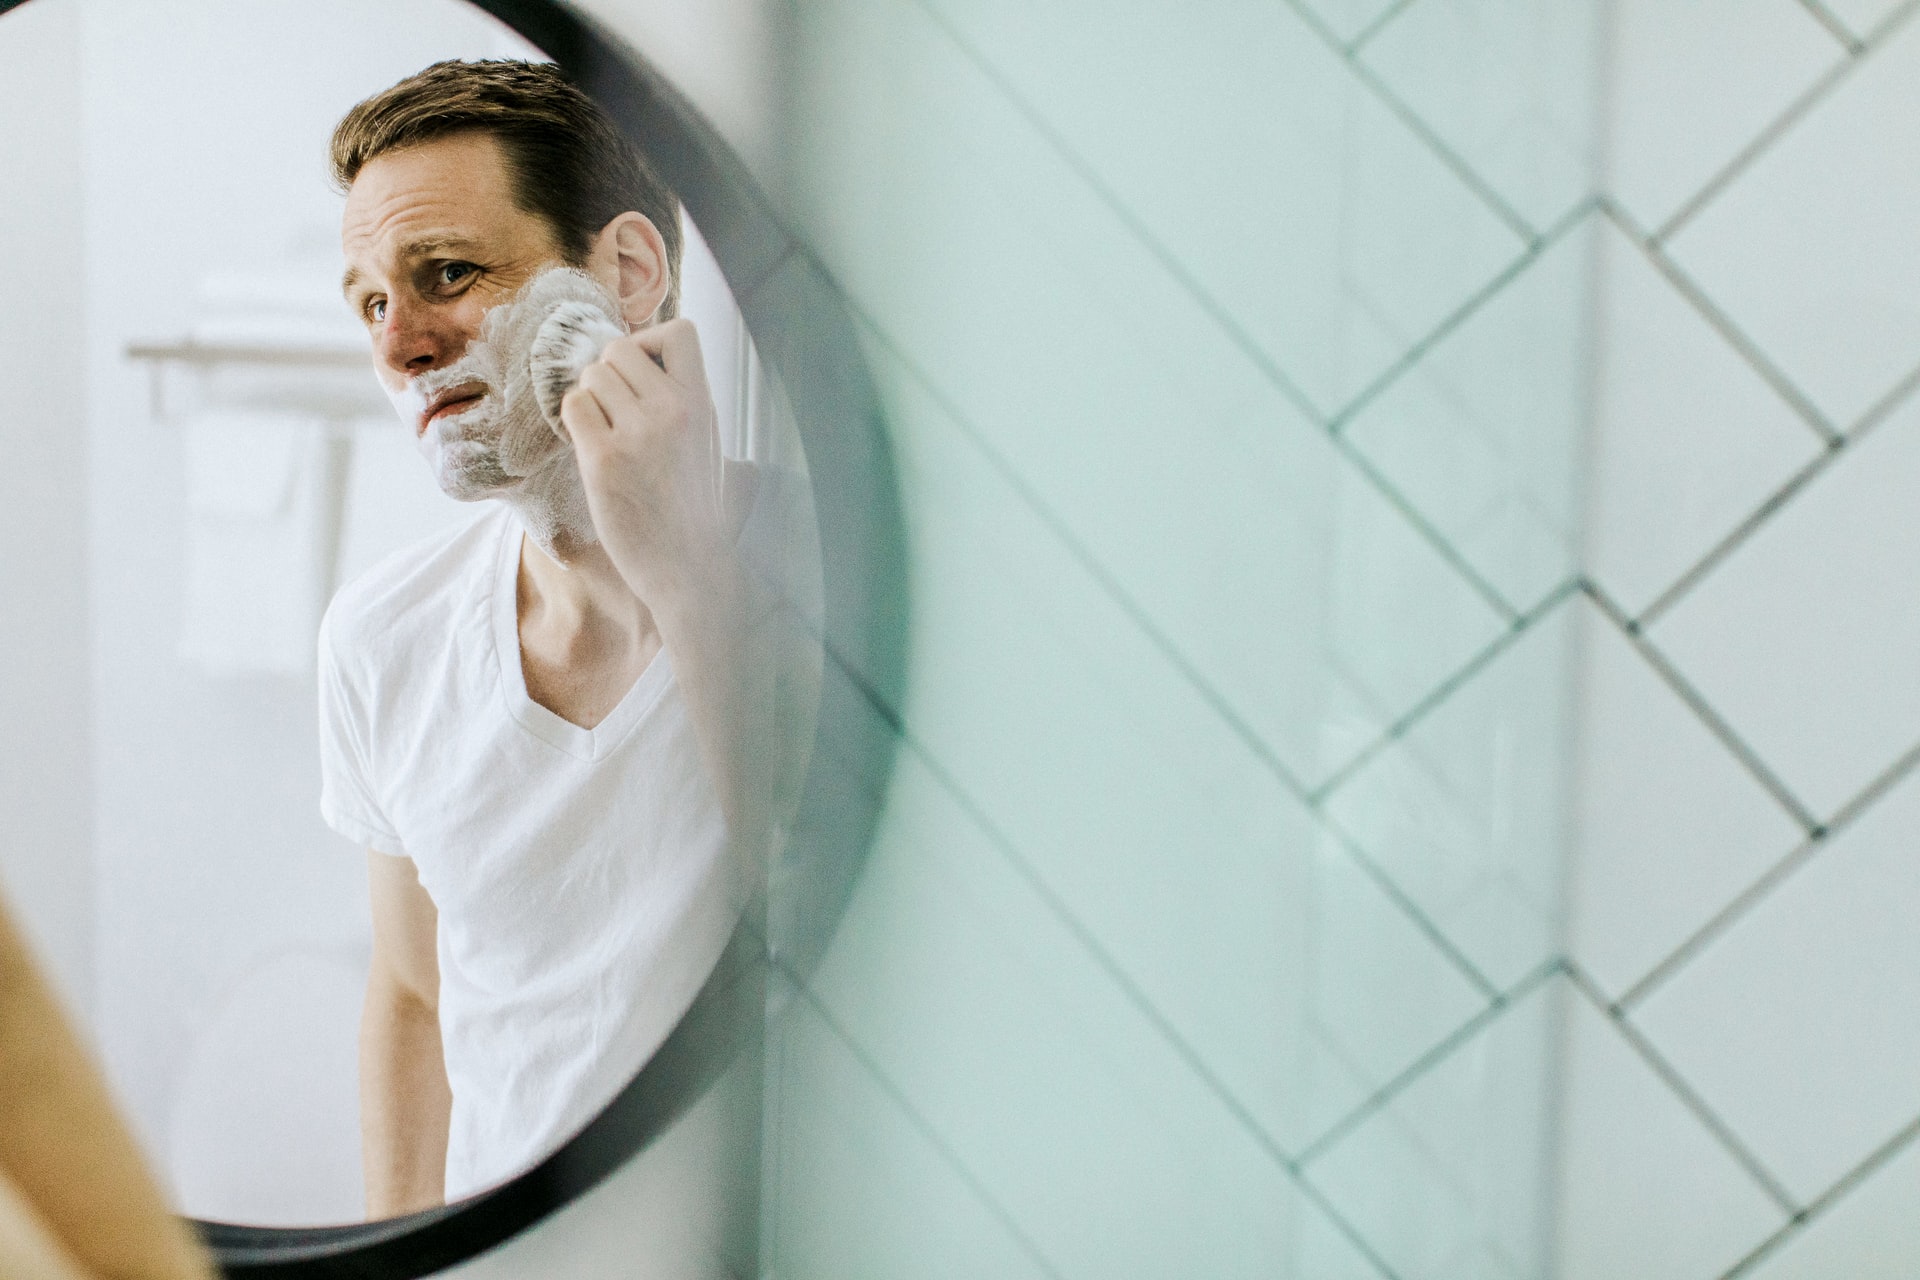 A man shaving while using a well lit bathroom mirror